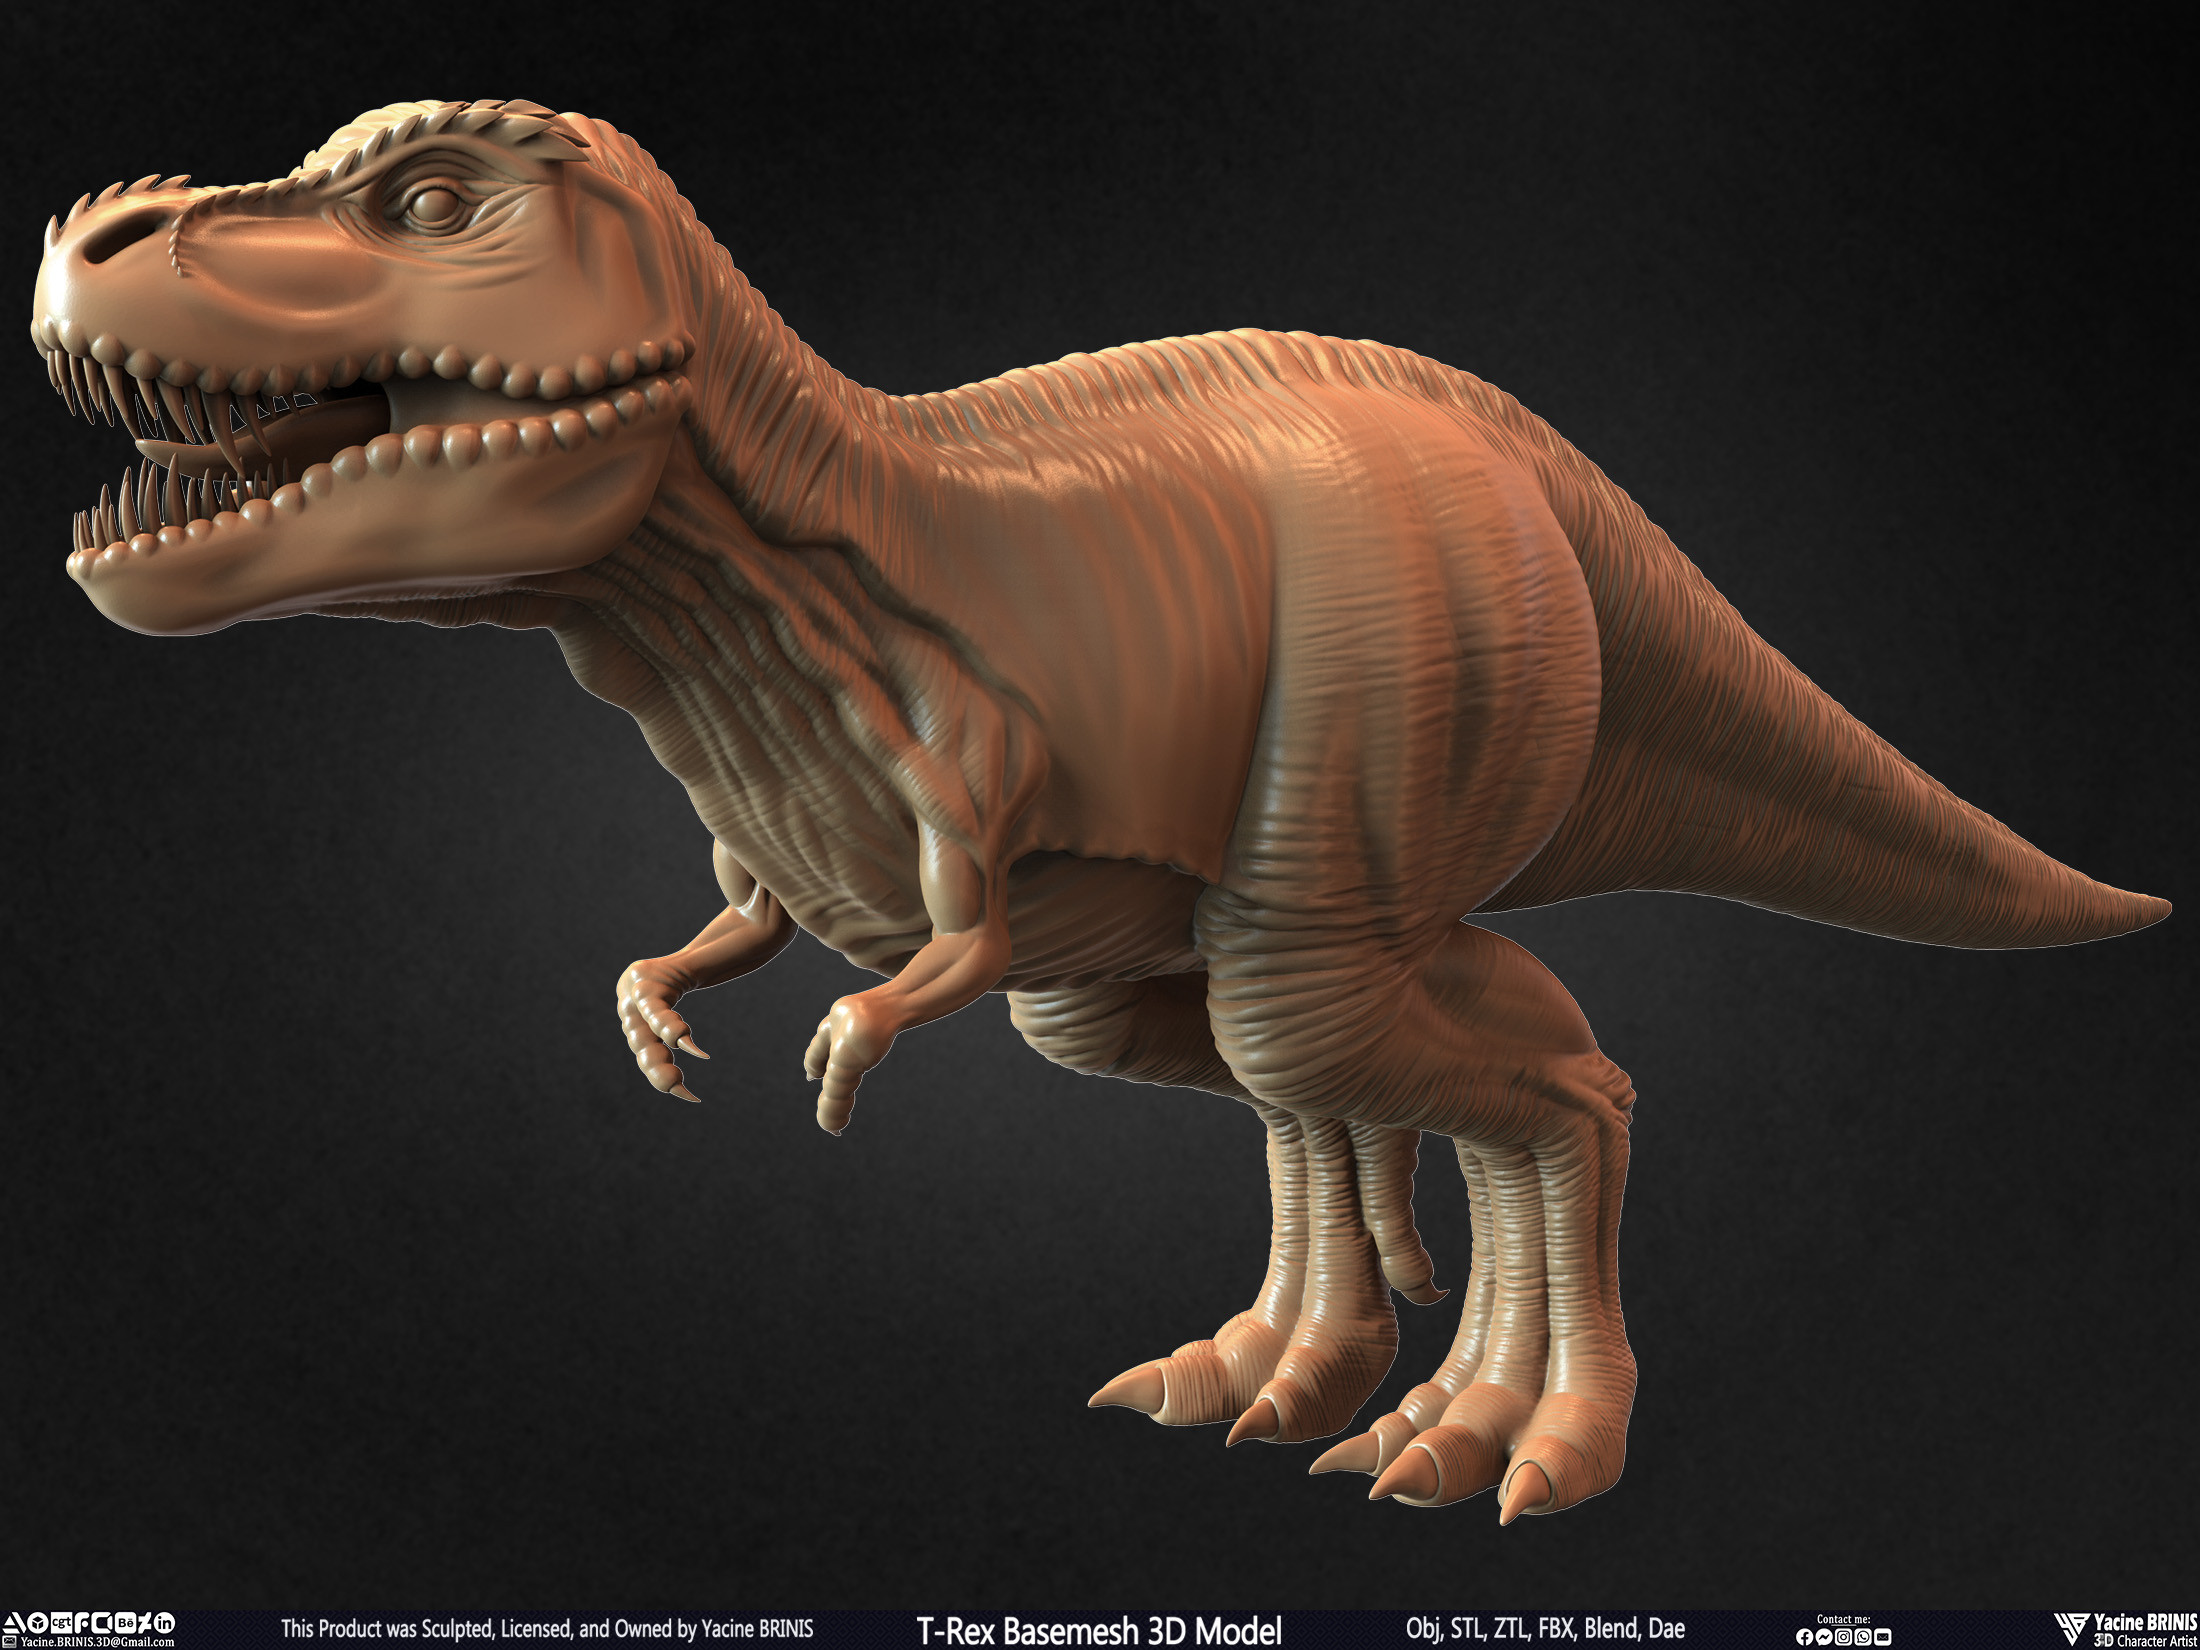 T-Rex Basemesh 3D Model (Tyrannosaurus Rex) Sculpted By Yacine BRINIS Set 009